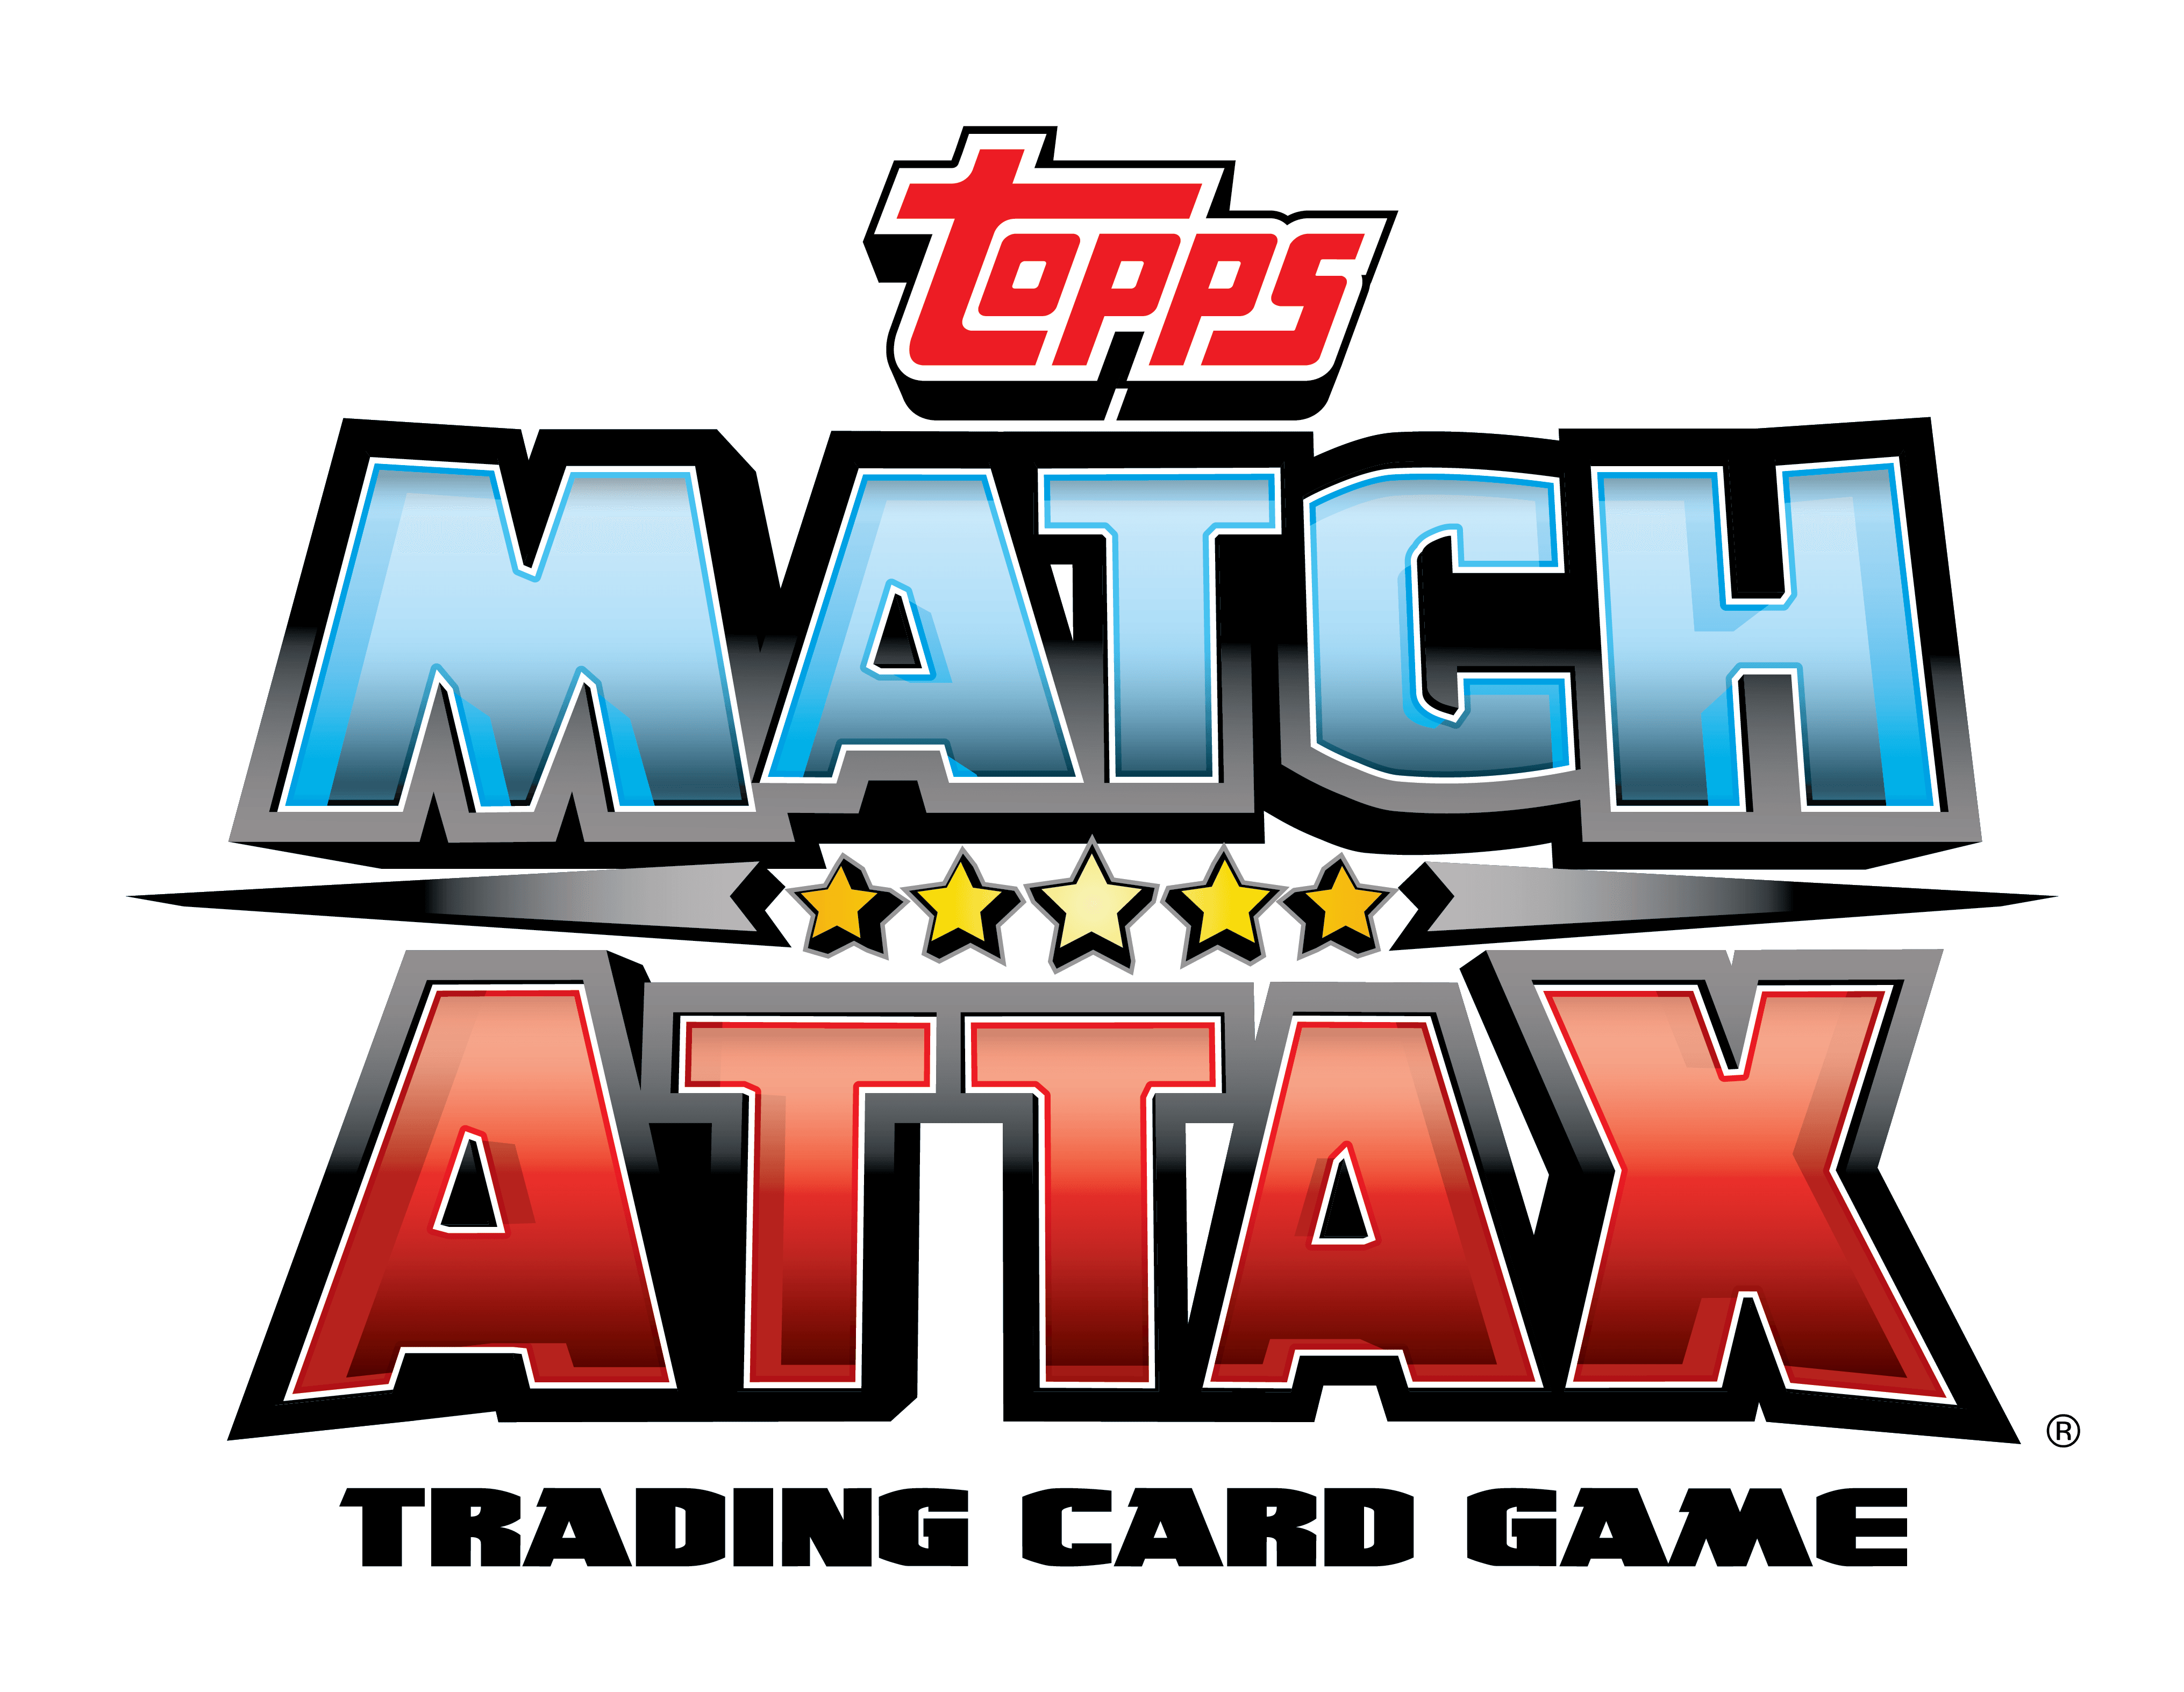 Topps - UEFA Champion's League Football (Soccer) Match Attax 2023/24 - Starter Pack - The Card Vault